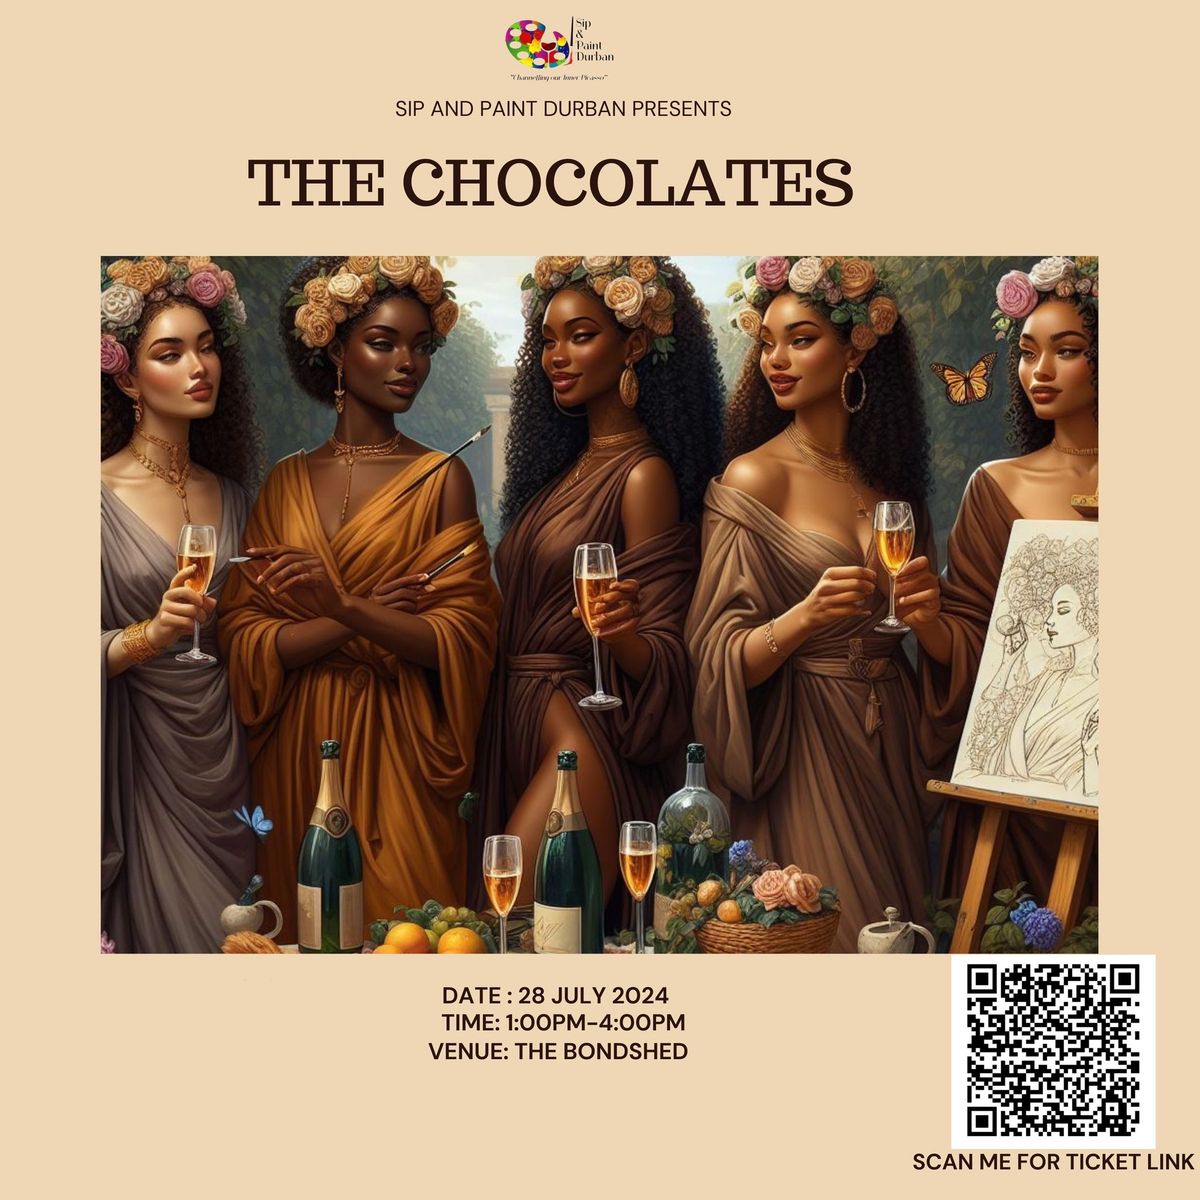 The Chocolates